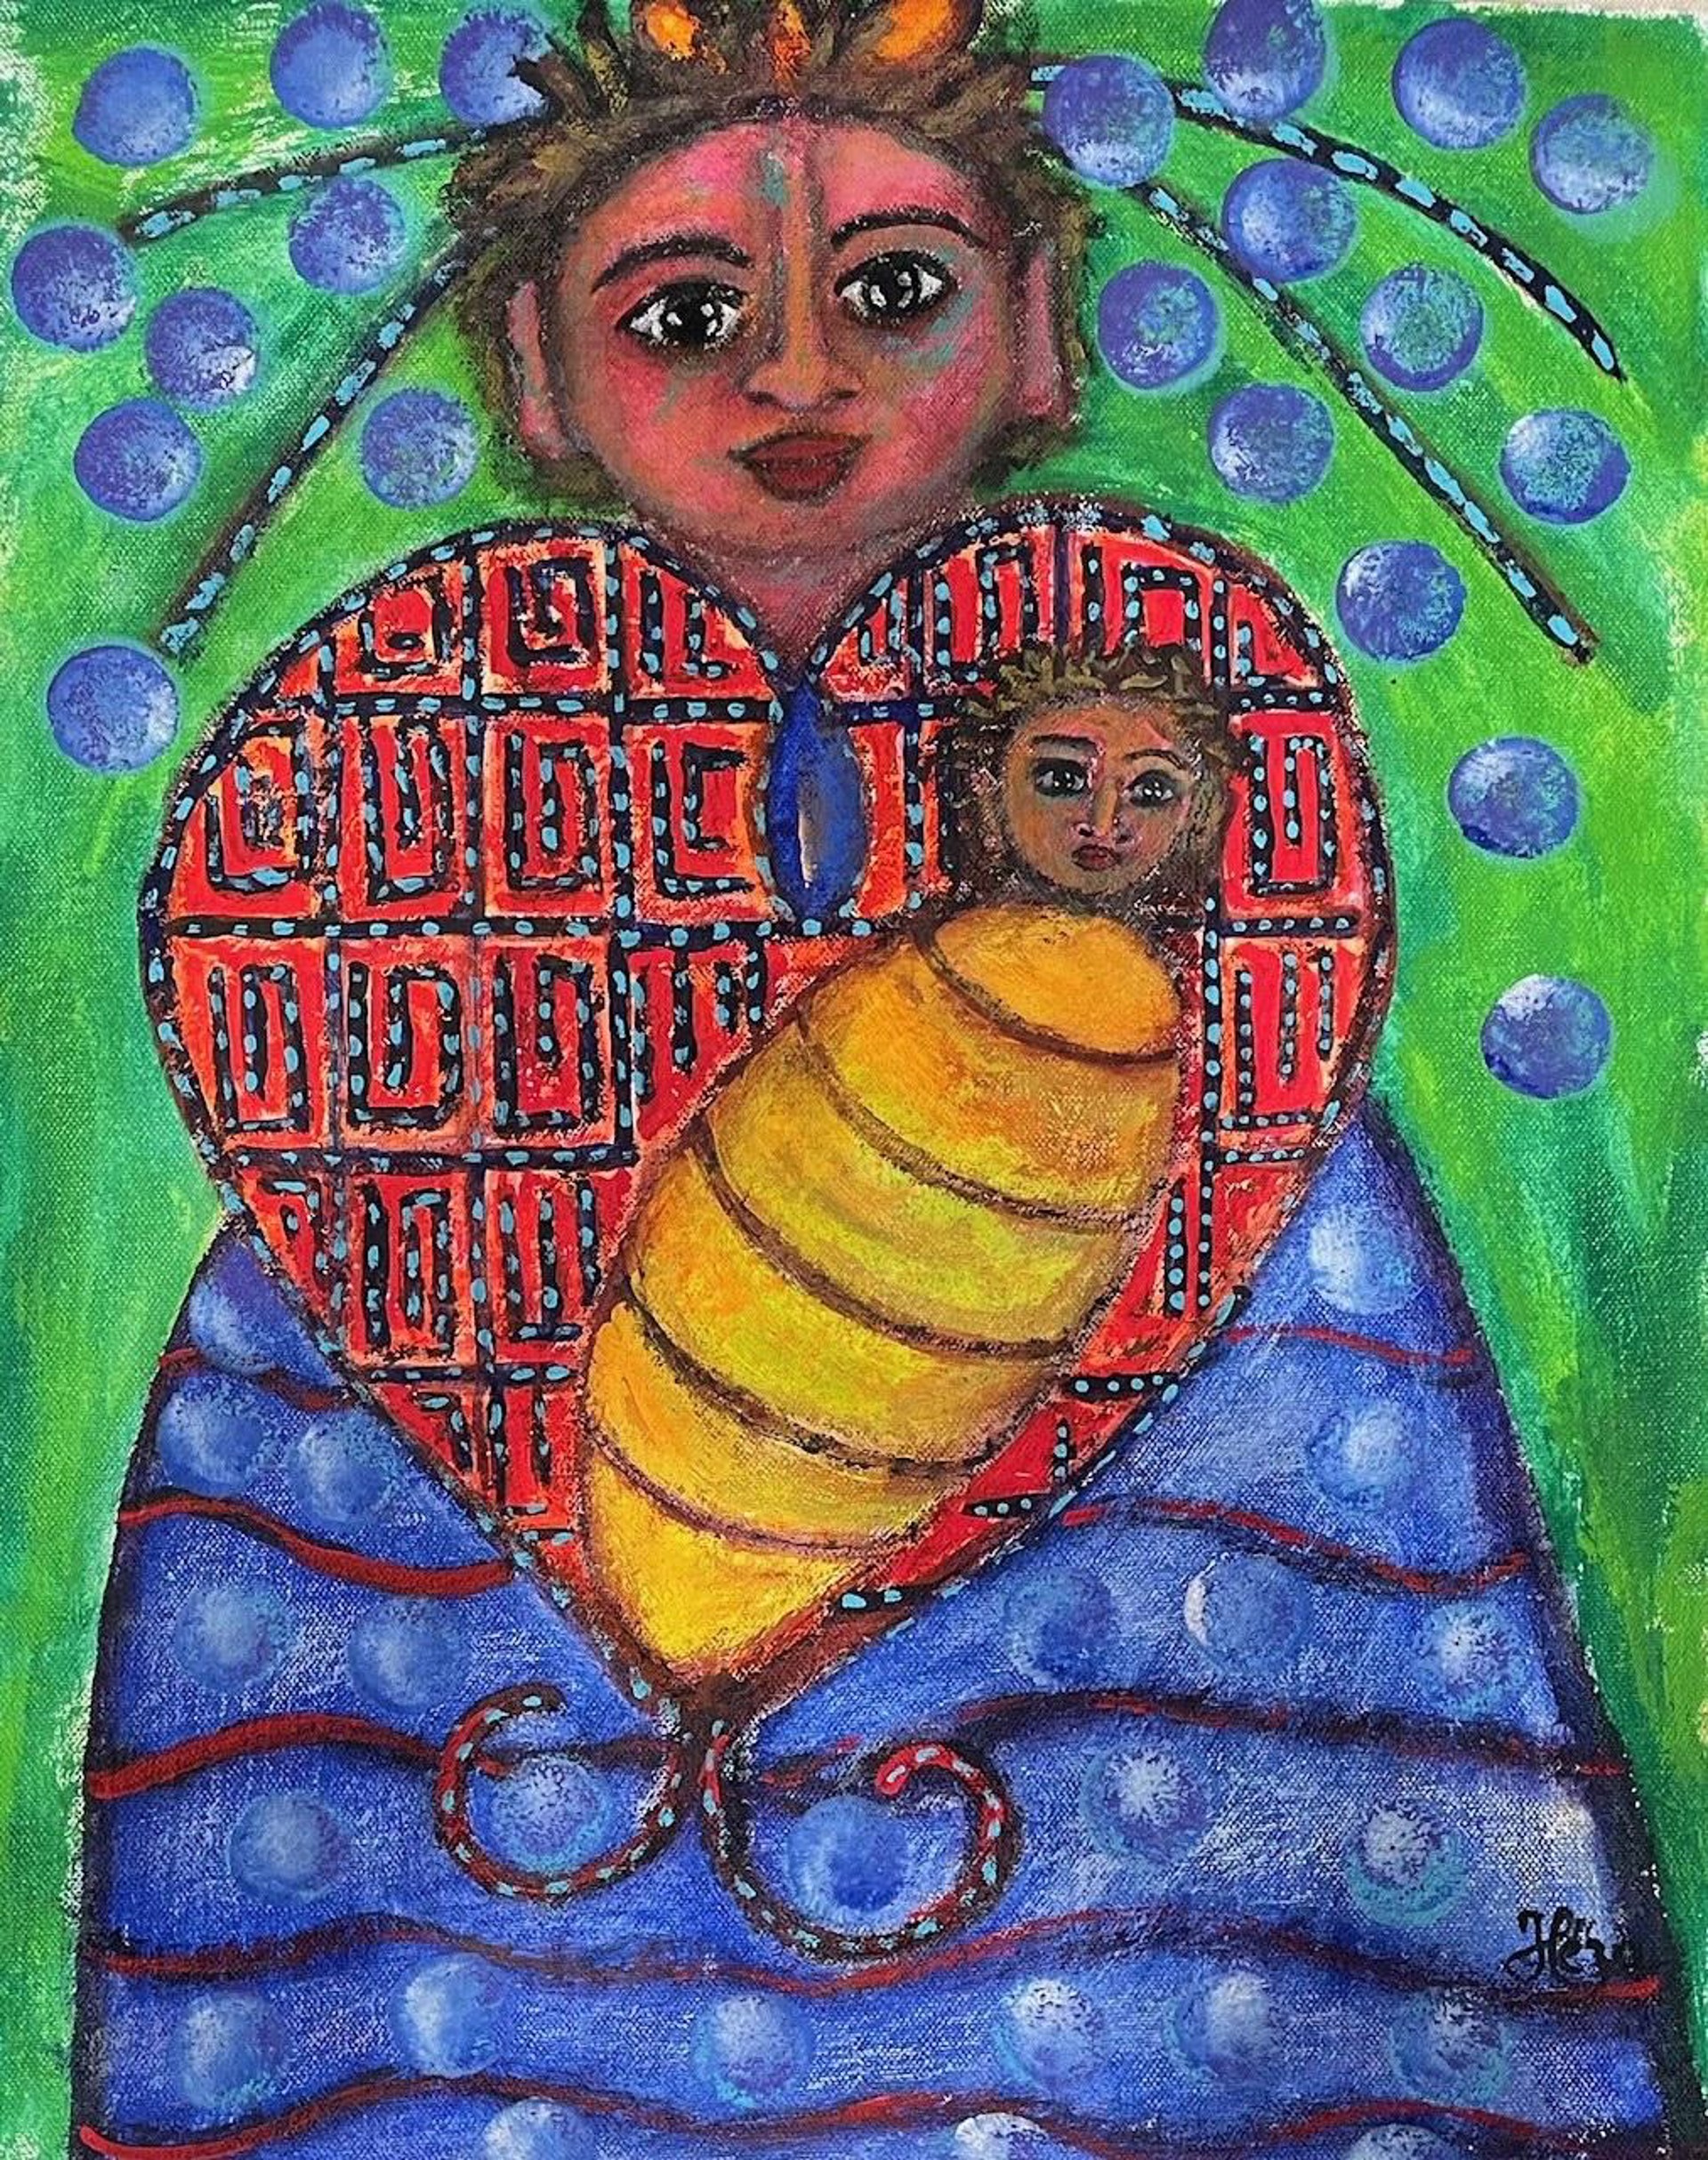 Erzulie & Child (Yellow) #4-JSB-NY by Heza Barjon (Haitian, b.1958)